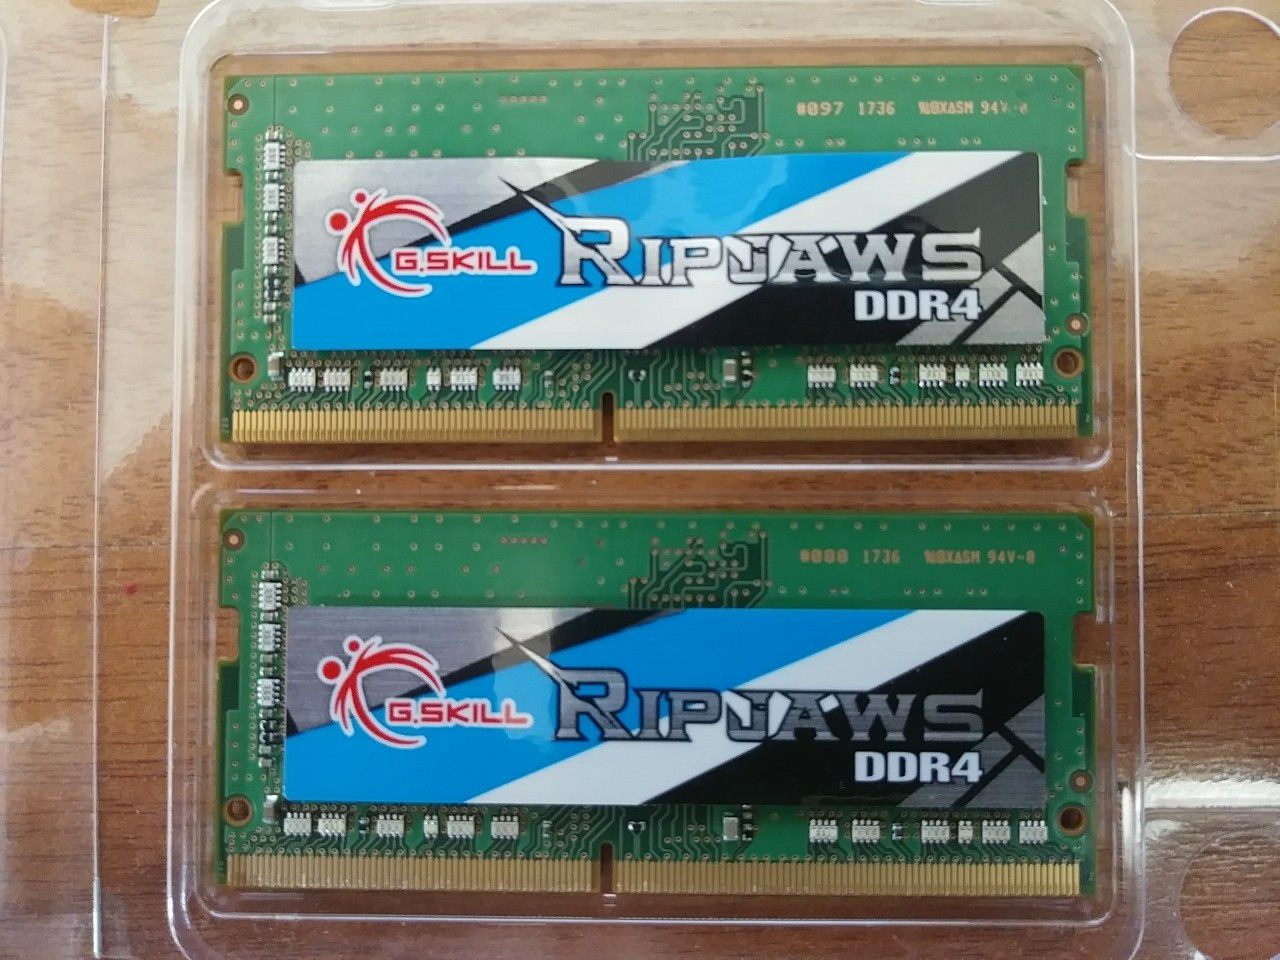 G.SKILL 16GB 2 x 8G Ripjaws DDR4-2400 PC4-19200 SODIMM Laptop Memory